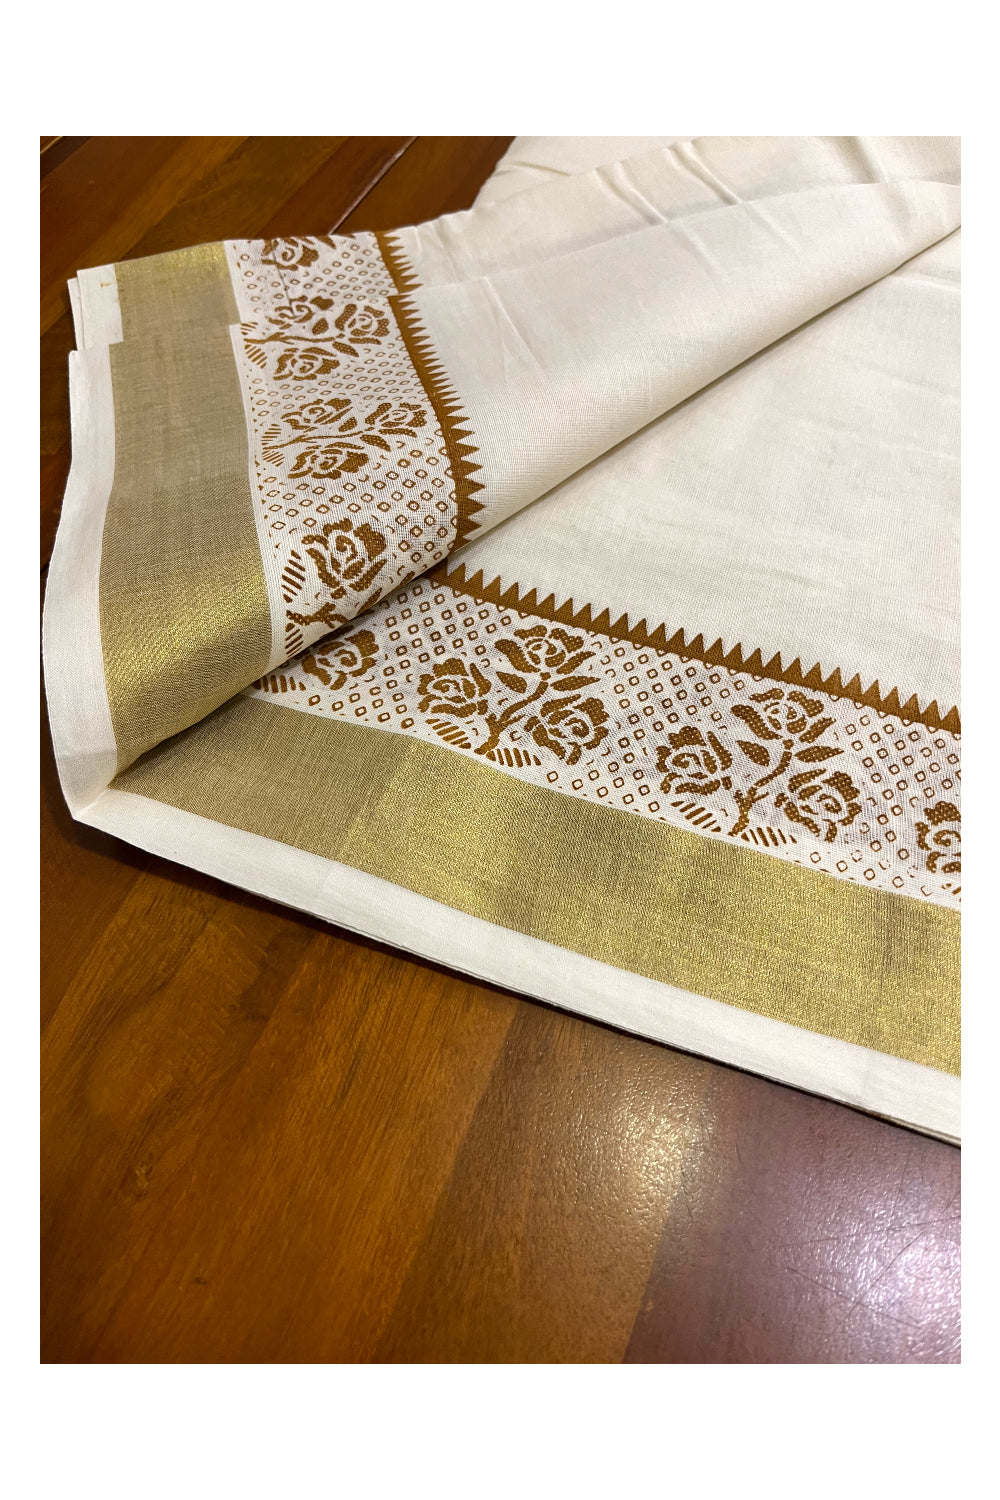 Kerala Cotton Single Set Mundu (Mundum Neriyathum) with Light Brown Block Prints and Kasavu Border - 2.80Mtrs